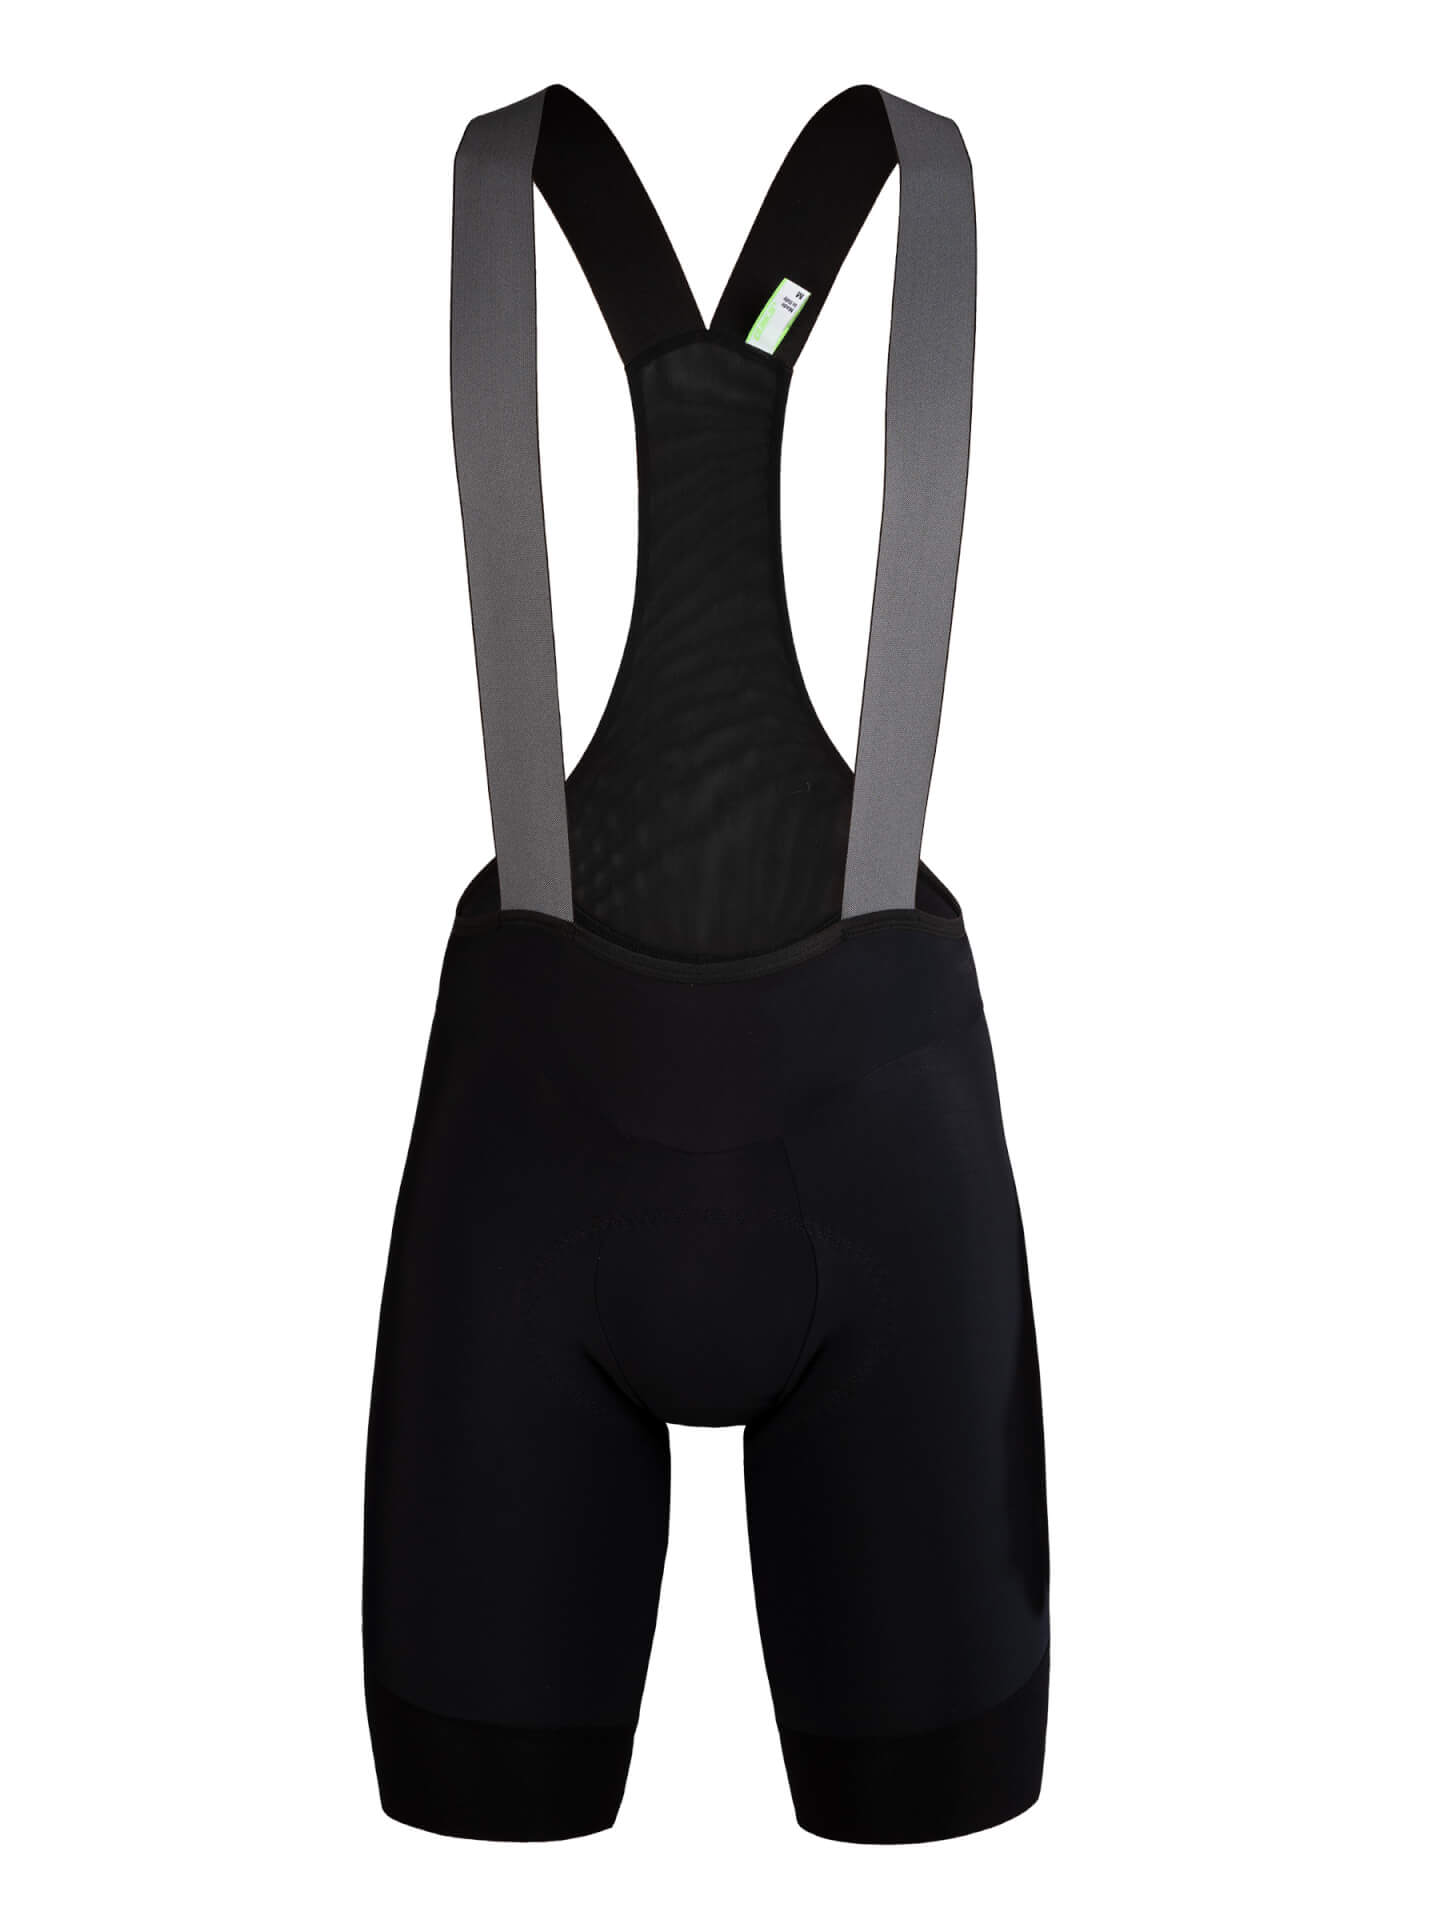 Elita Women's Seamless Spaghetti Strap Body Suit, Black, XL 